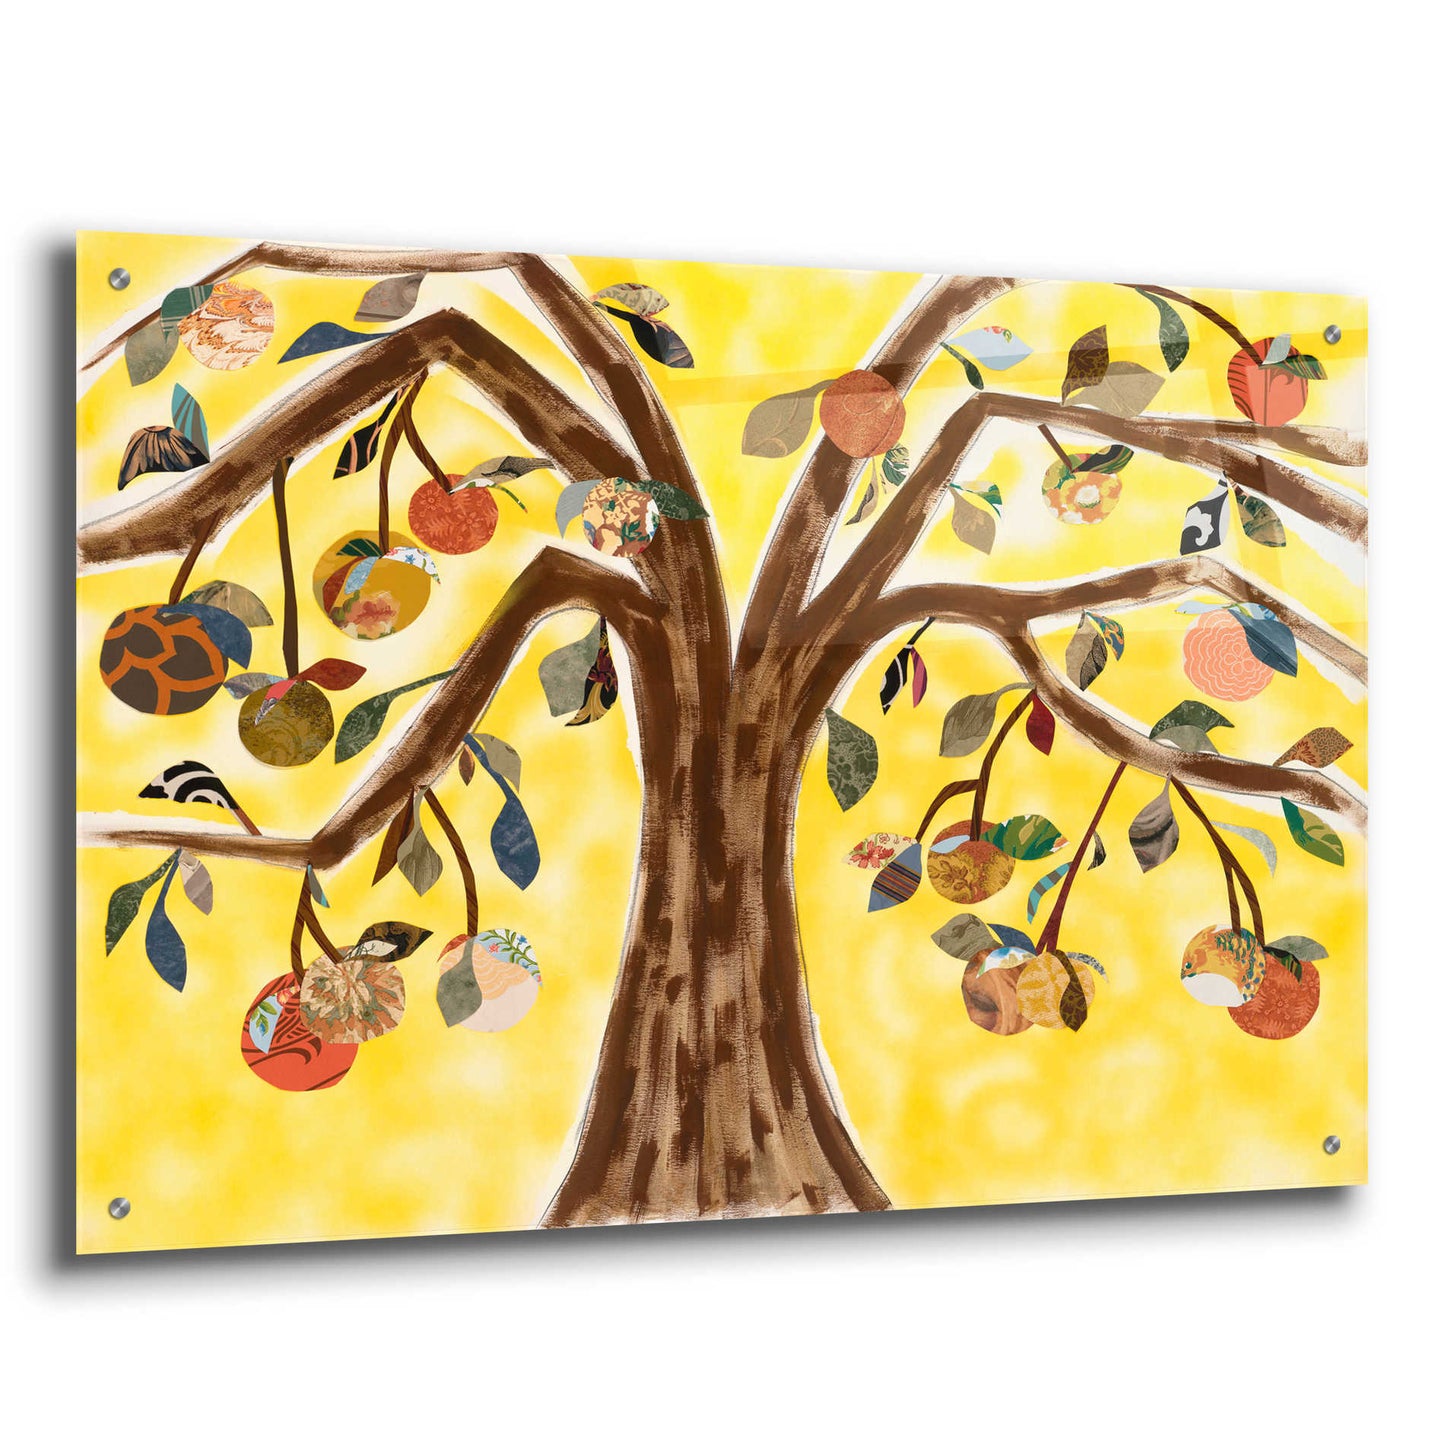 Epic Art 'Yellow Orange Tree' by Sisa Jasper,' Acrylic Glass Wall Art,36x24